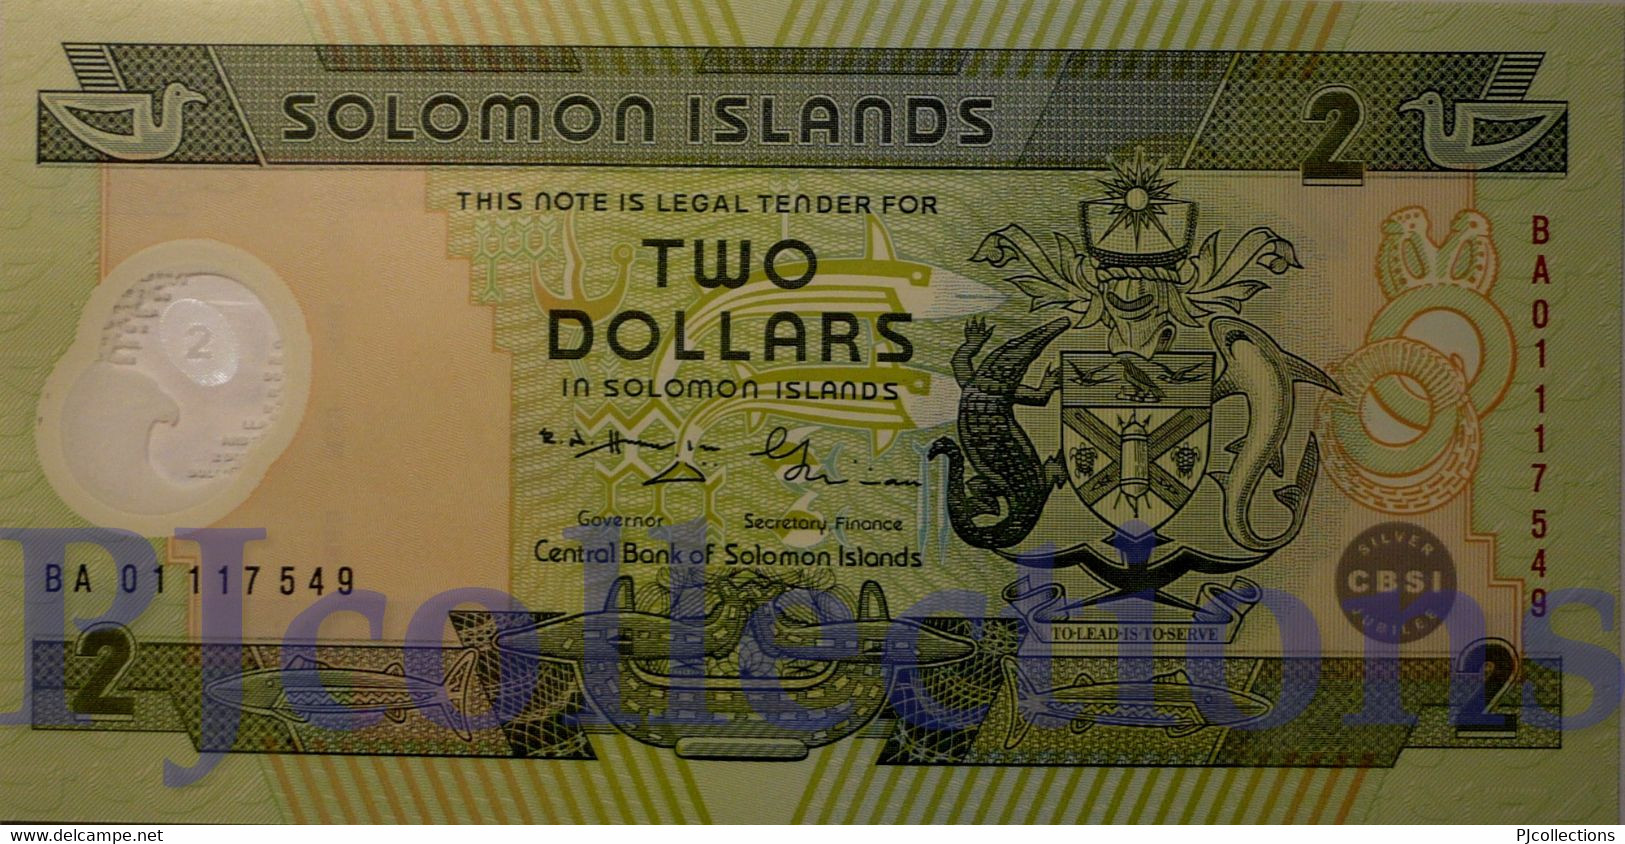 SOLOMON ISLANDS 2 DOLLARS 2001 PICK 23 POLYMER UNC - Solomon Islands